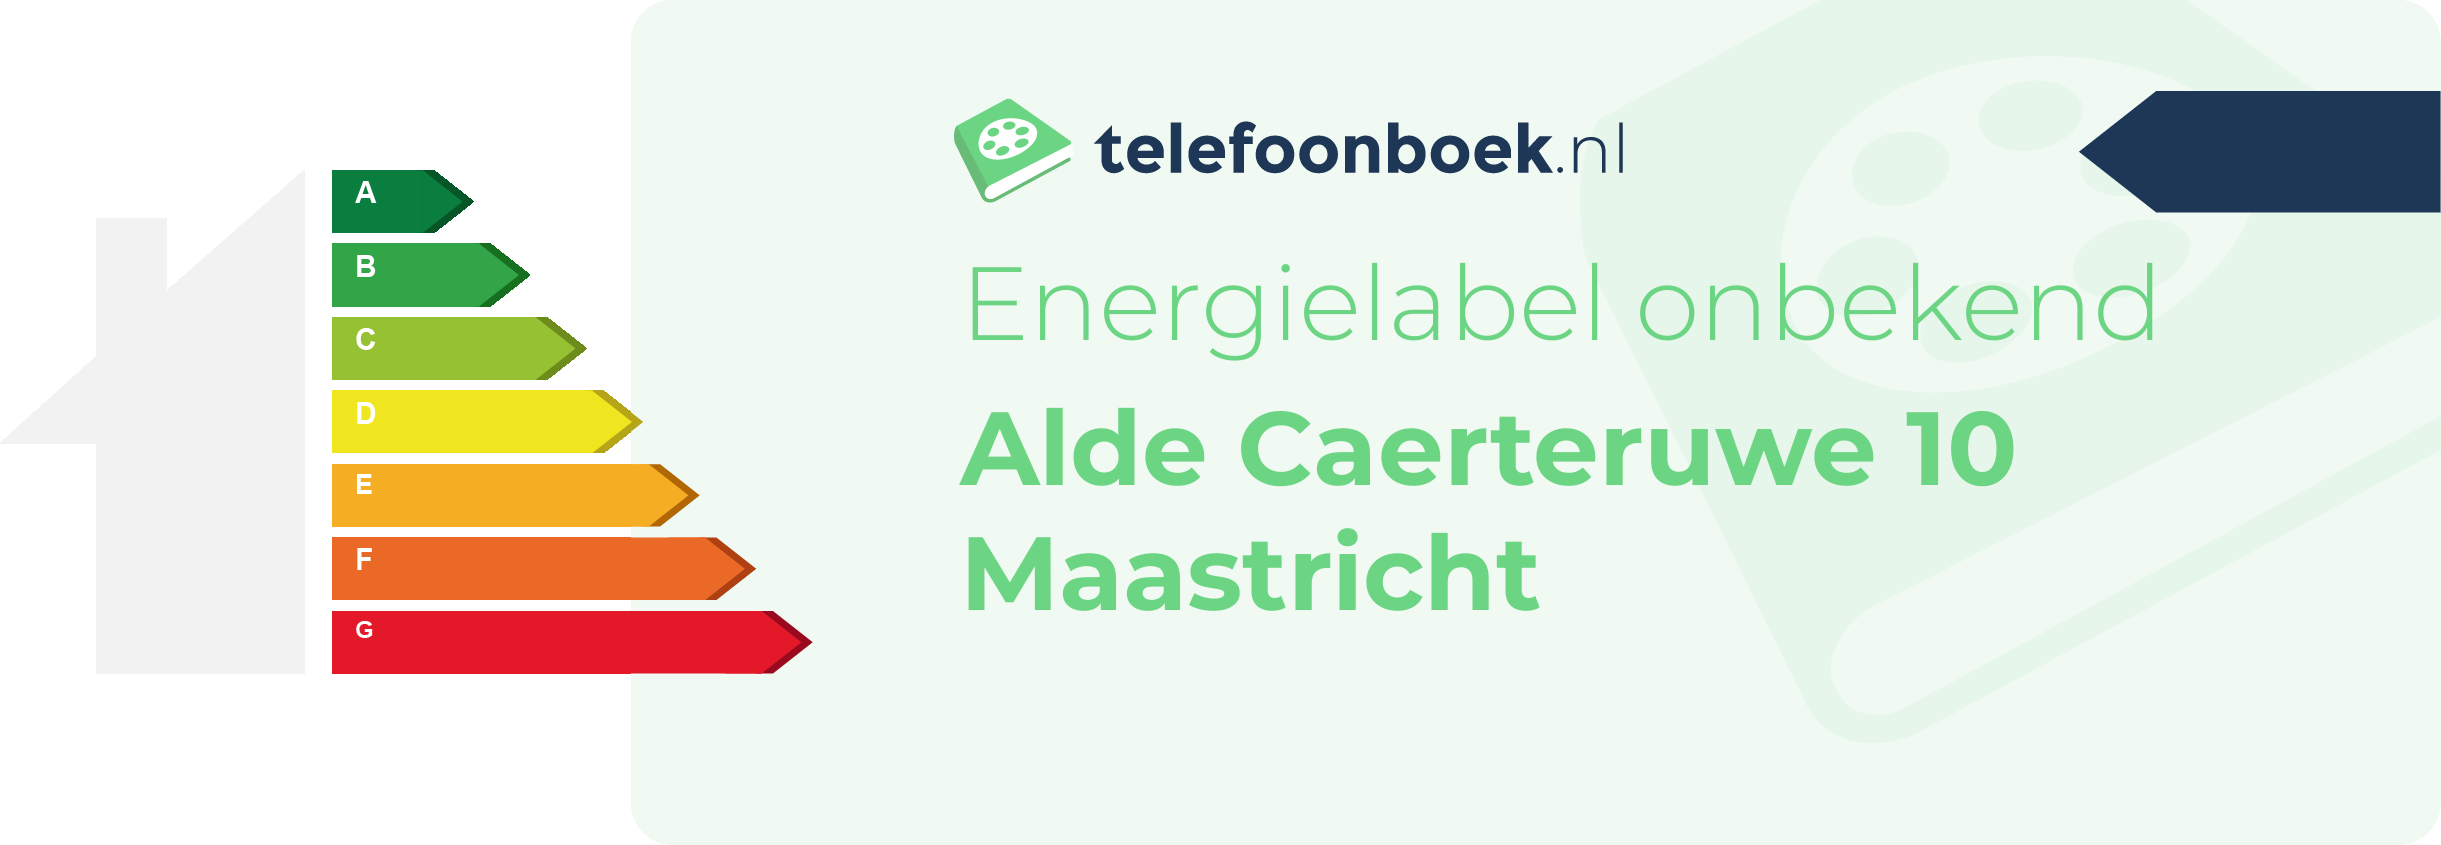 Energielabel Alde Caerteruwe 10 Maastricht